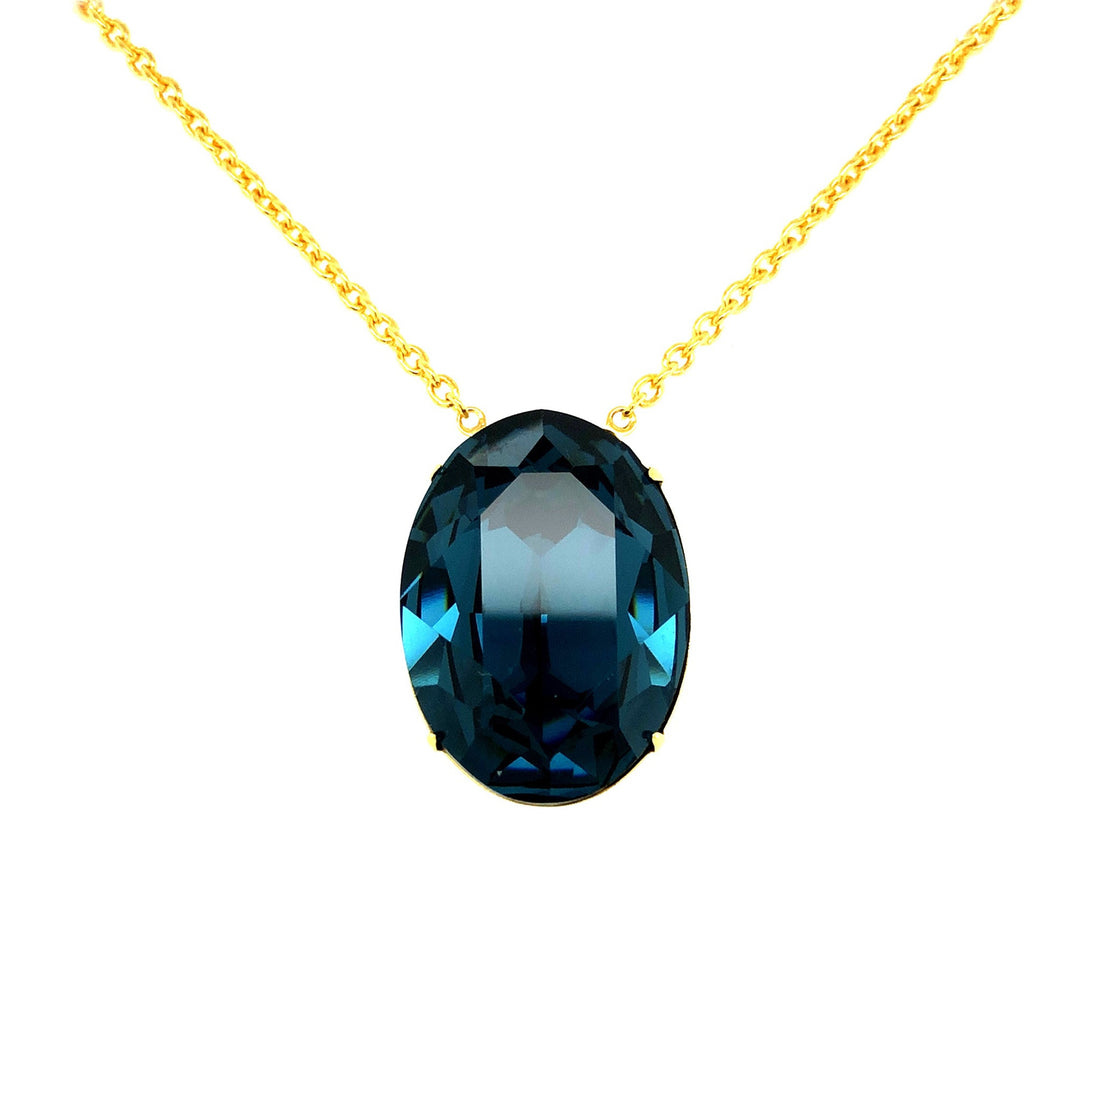 Victoria necklace, blu, from Scandinavia LoveNotes.